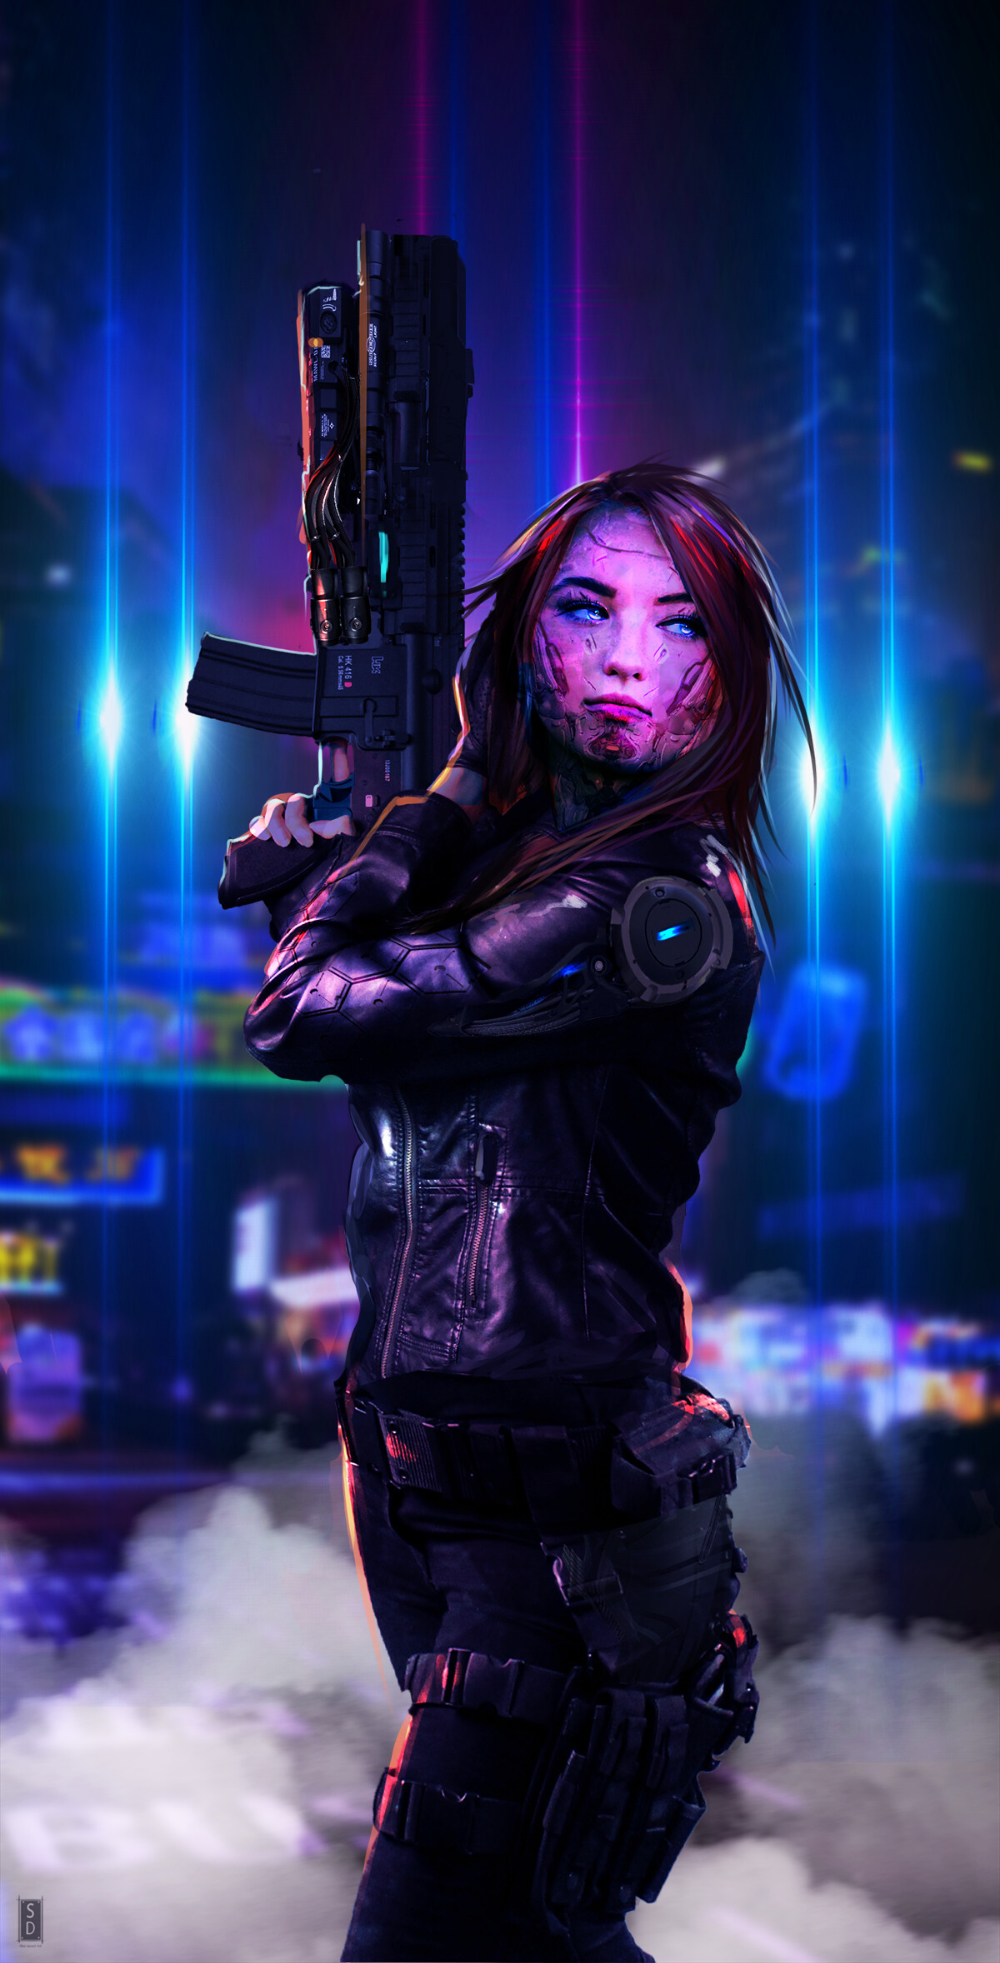 Enforcer, Shai Daniel. Cyberpunk art, Cyberpunk aesthetic, Cyberpunk character